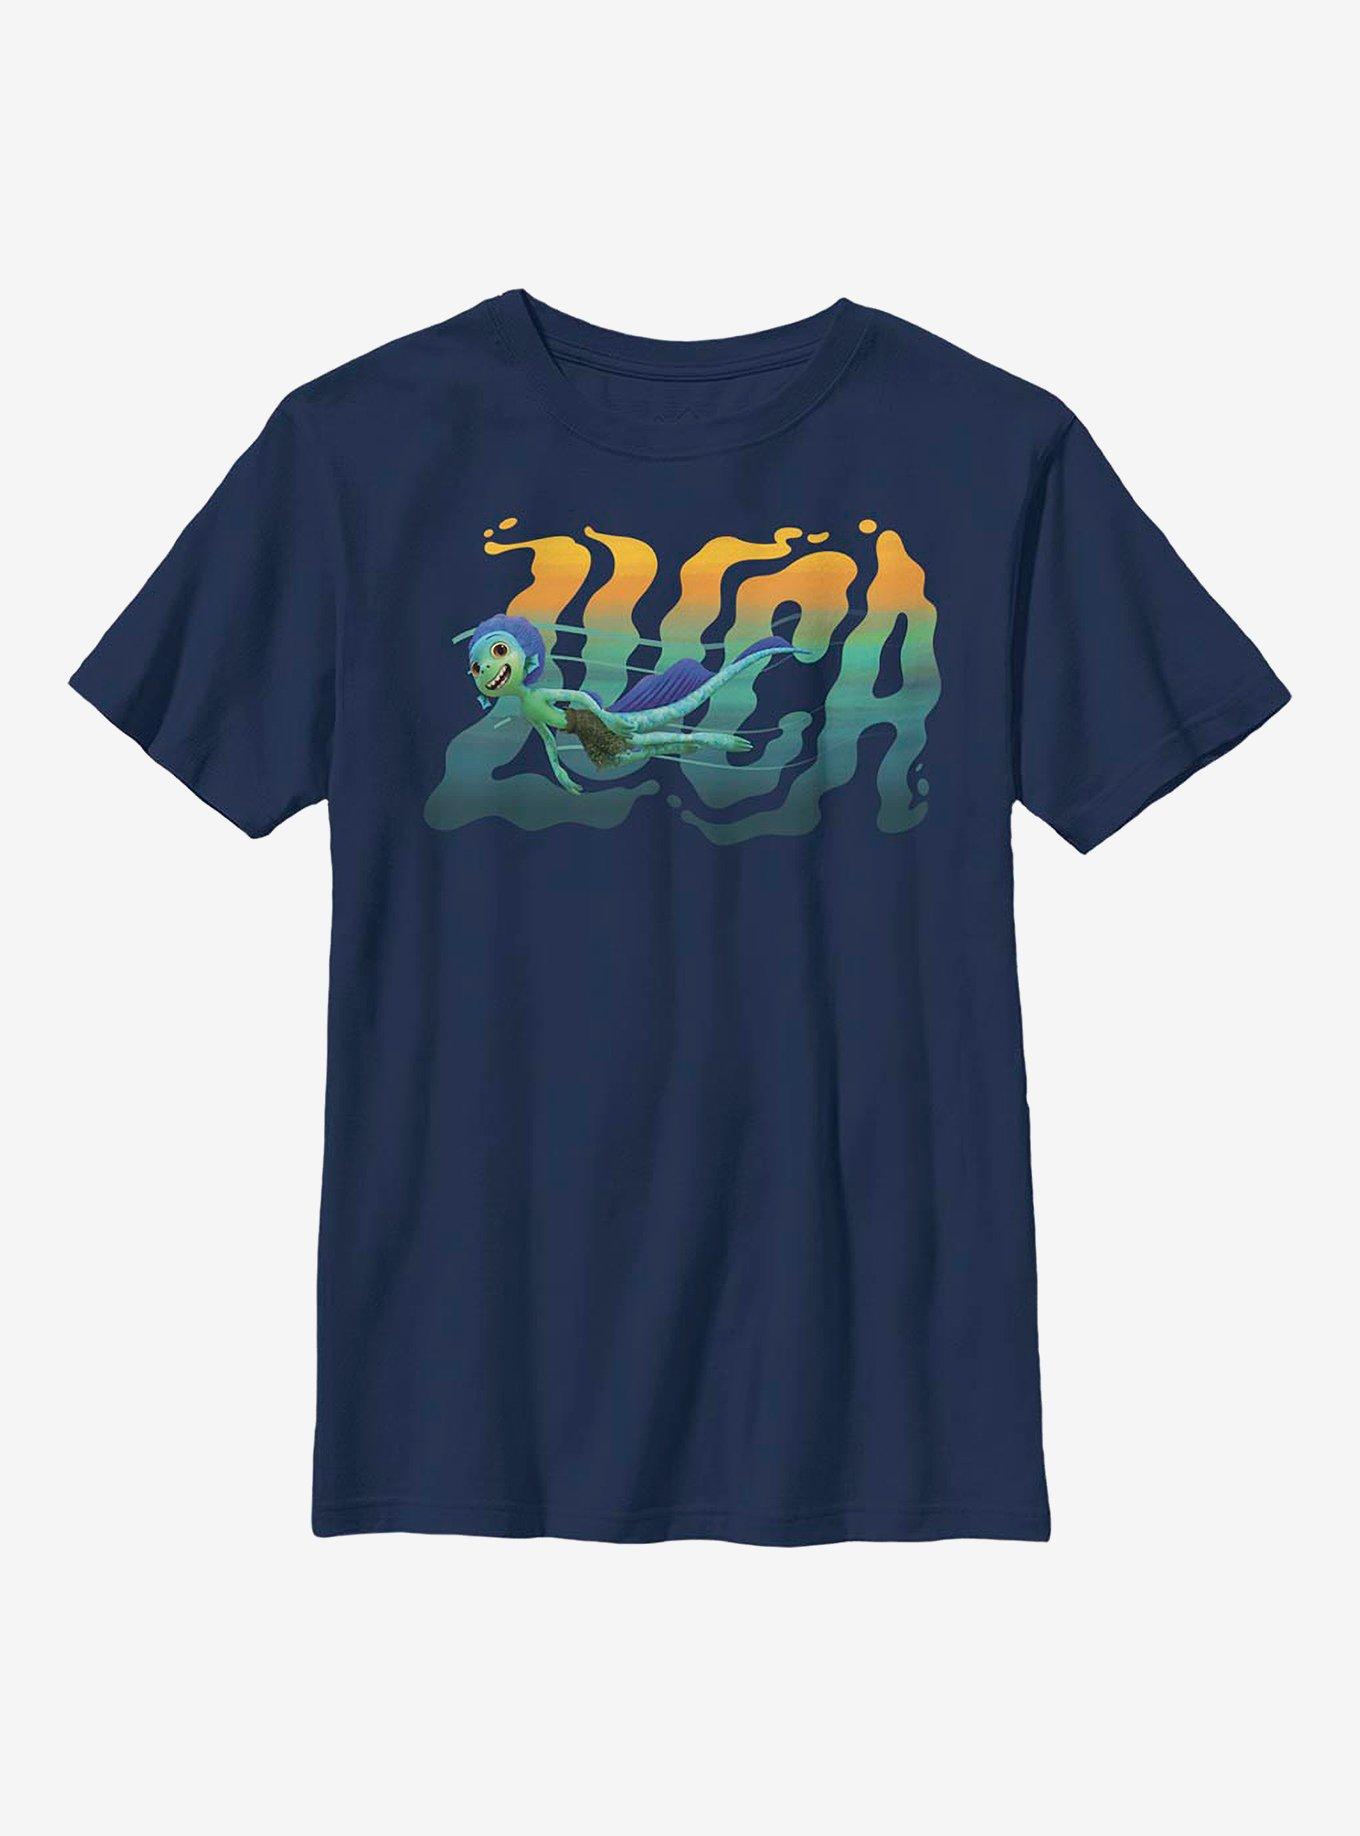 Disney Pixar Luca Swimming Youth T-Shirt, NAVY, hi-res